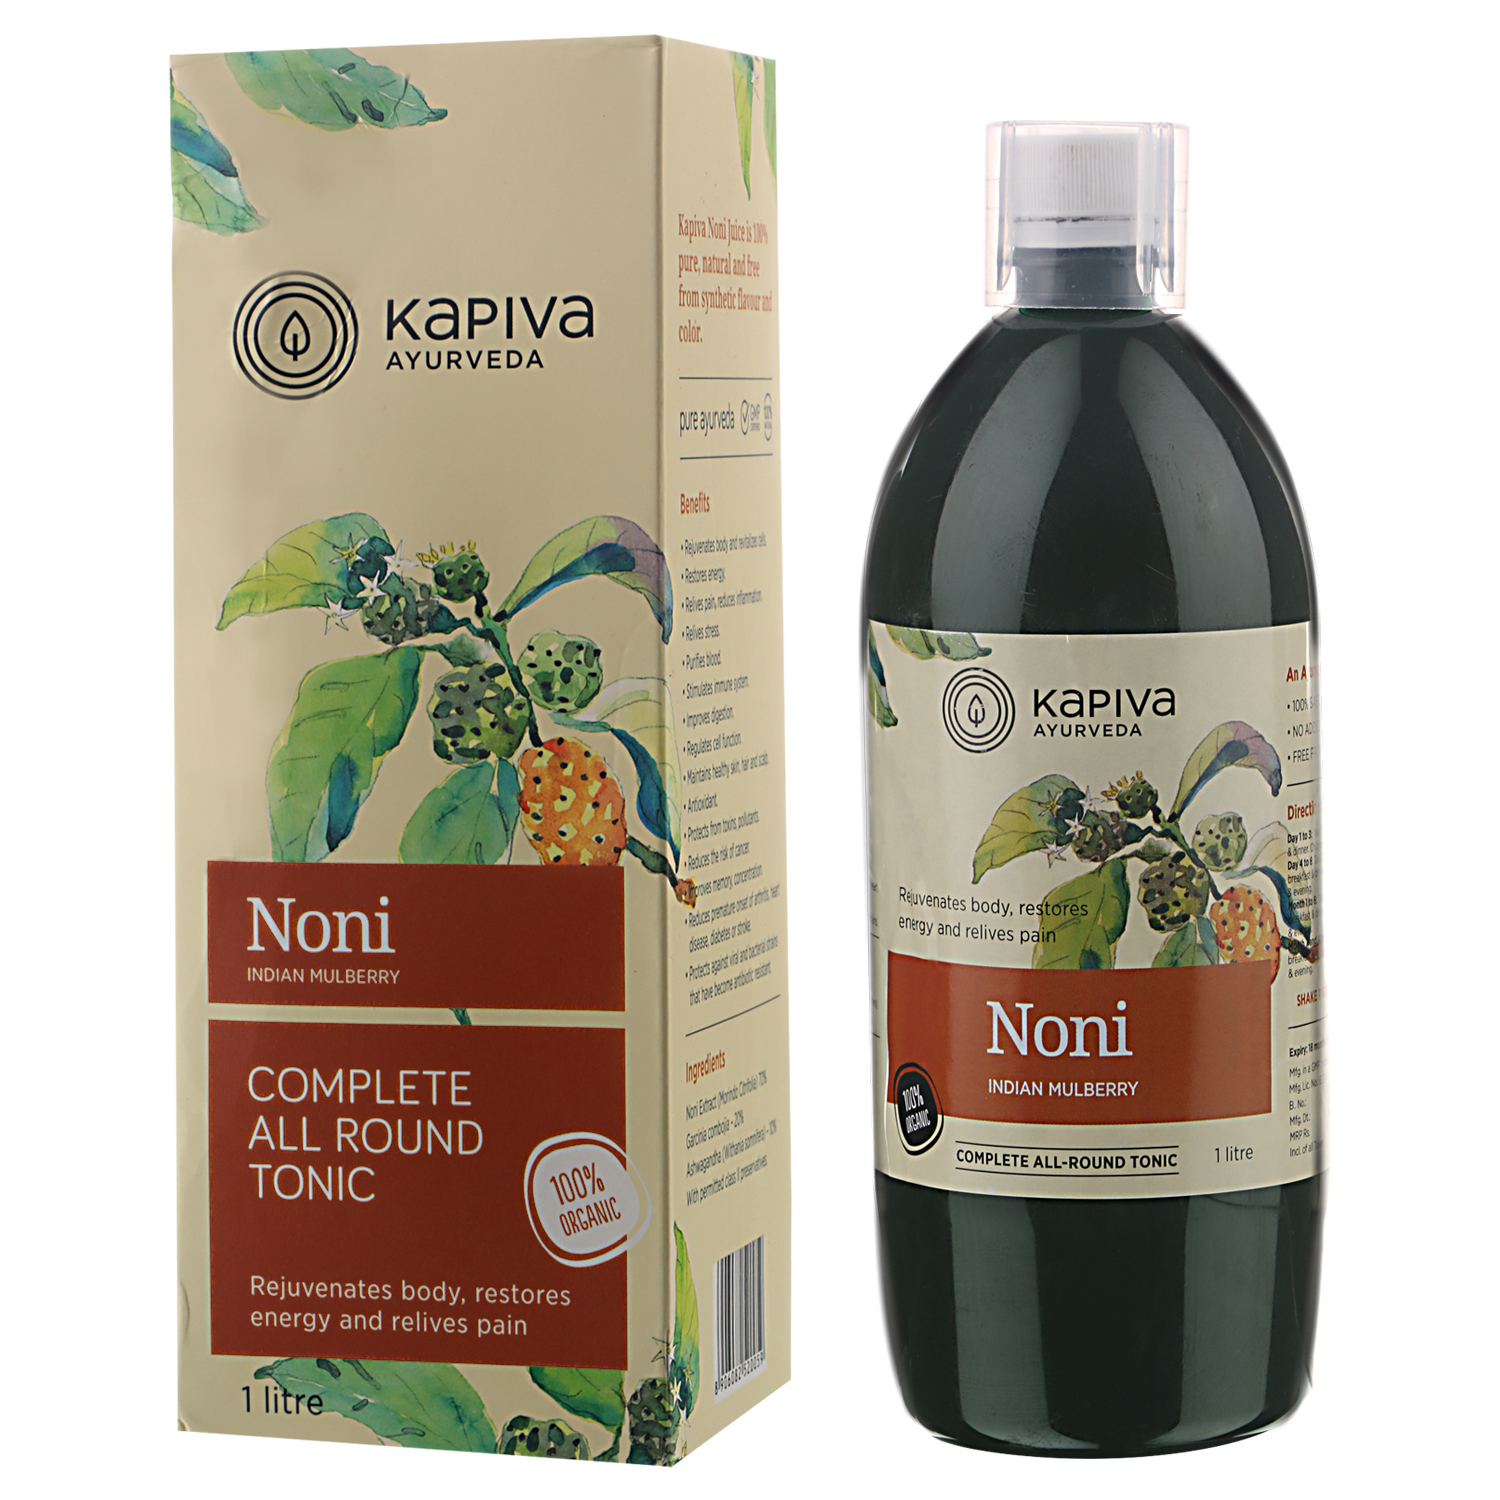 Buy Kapiva Noni Juice at Best Price Online